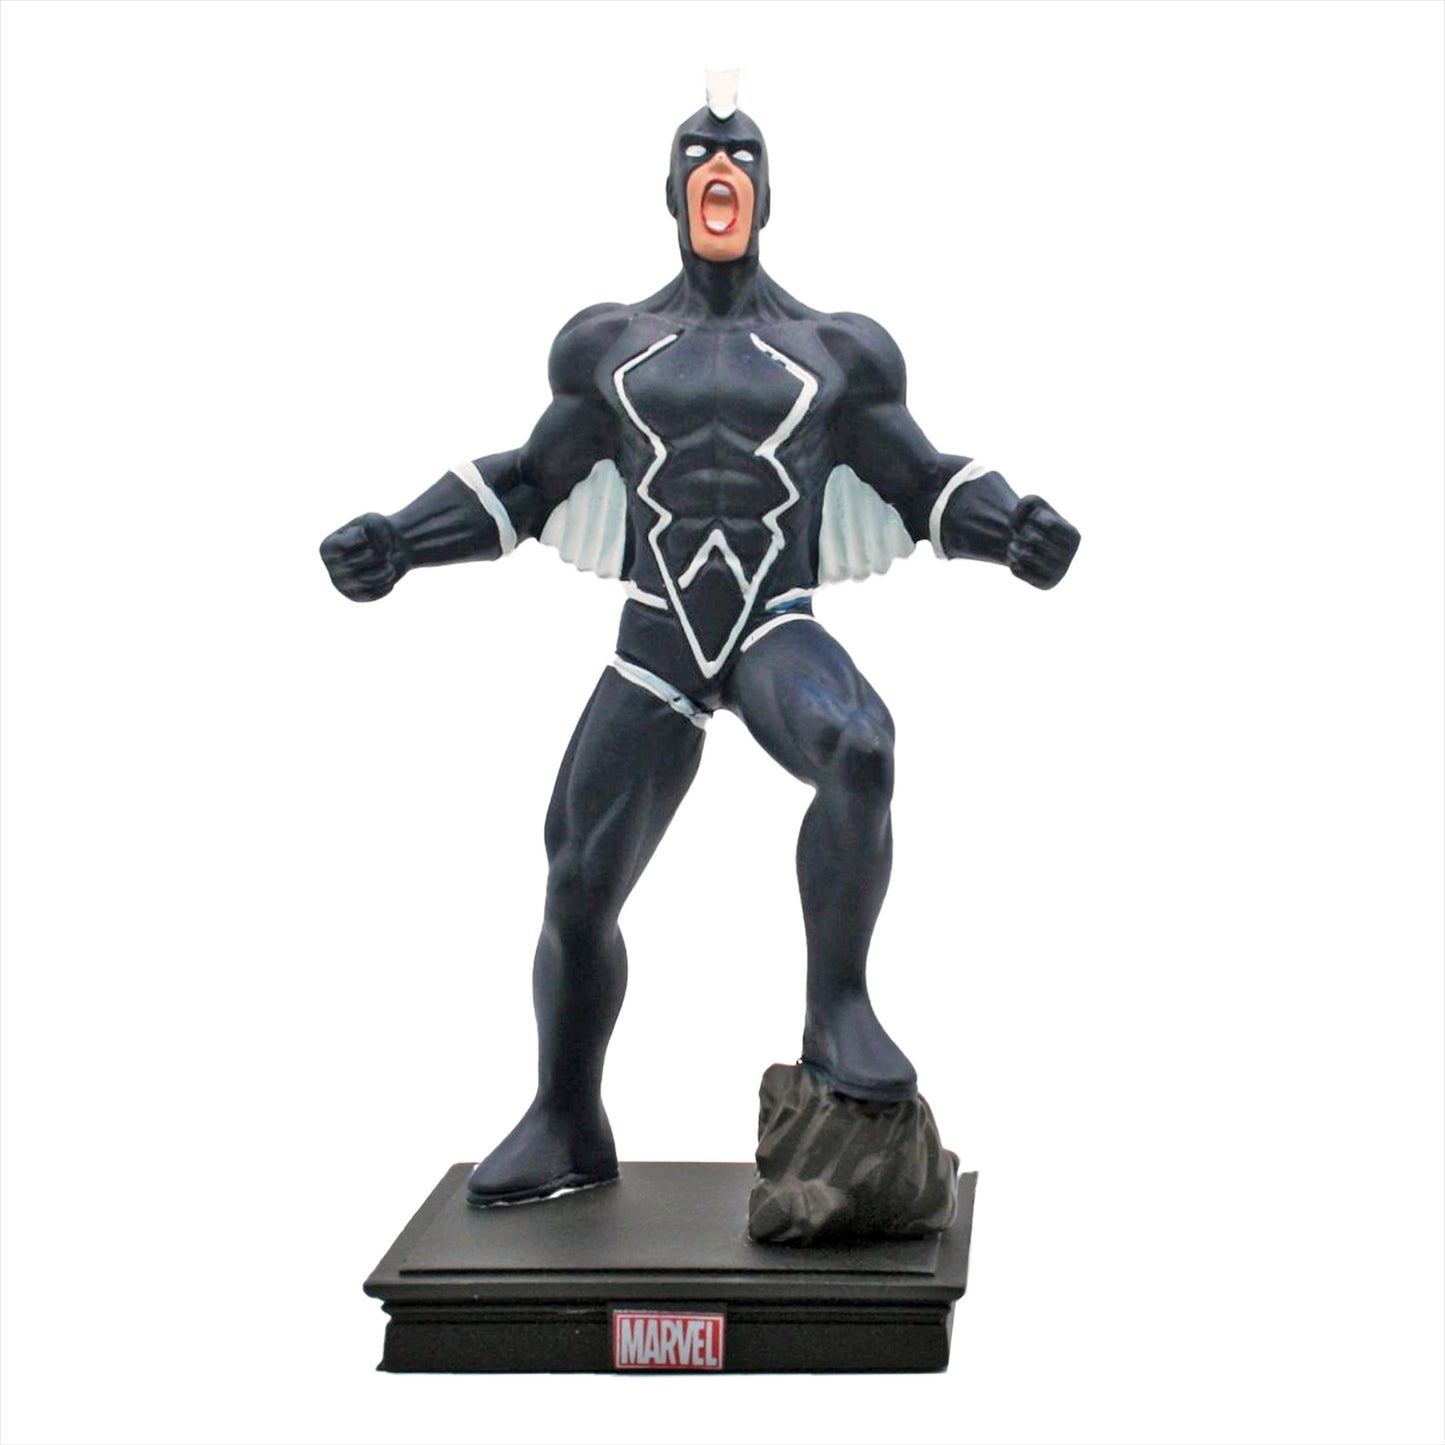 BLACK BOLT Resin Marvel Universe Figurine 3D Panini 4" Action Figure